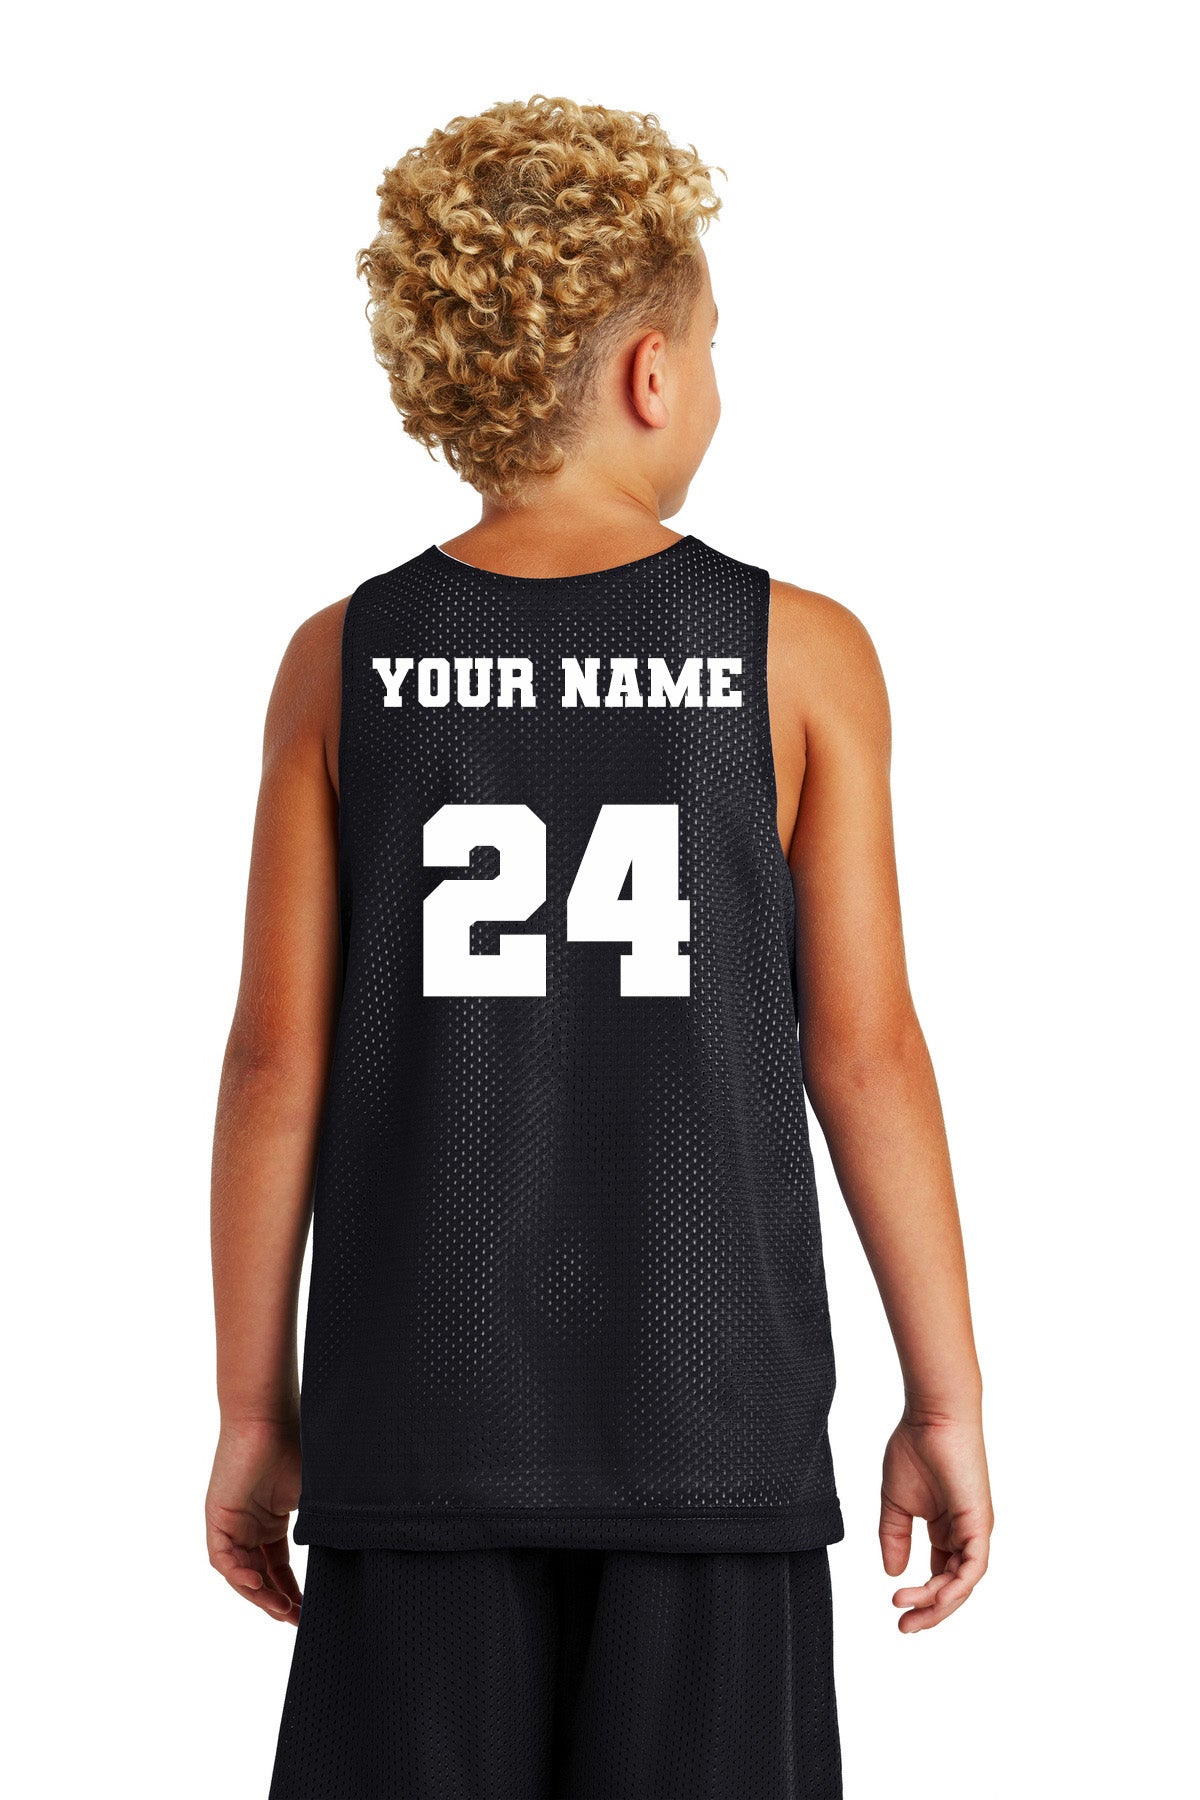 Youth Basketball Shirts Man's Custom Basketball Wear Latest For